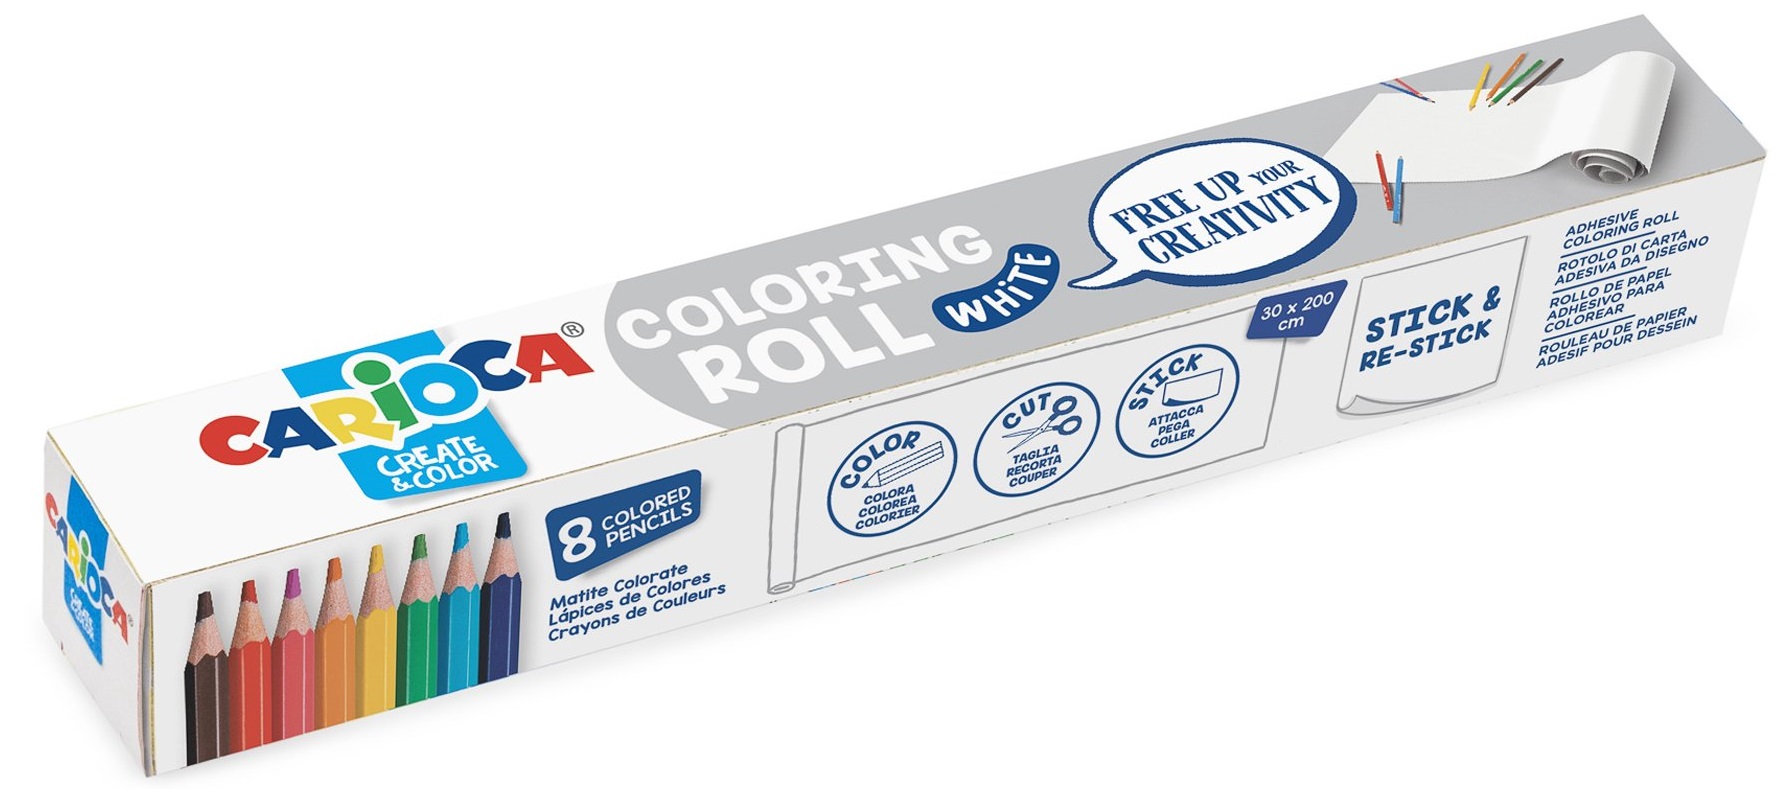 CARIOCA Coloring Roll, 30 x 198 cm/rola, hartie autoadeziva - White